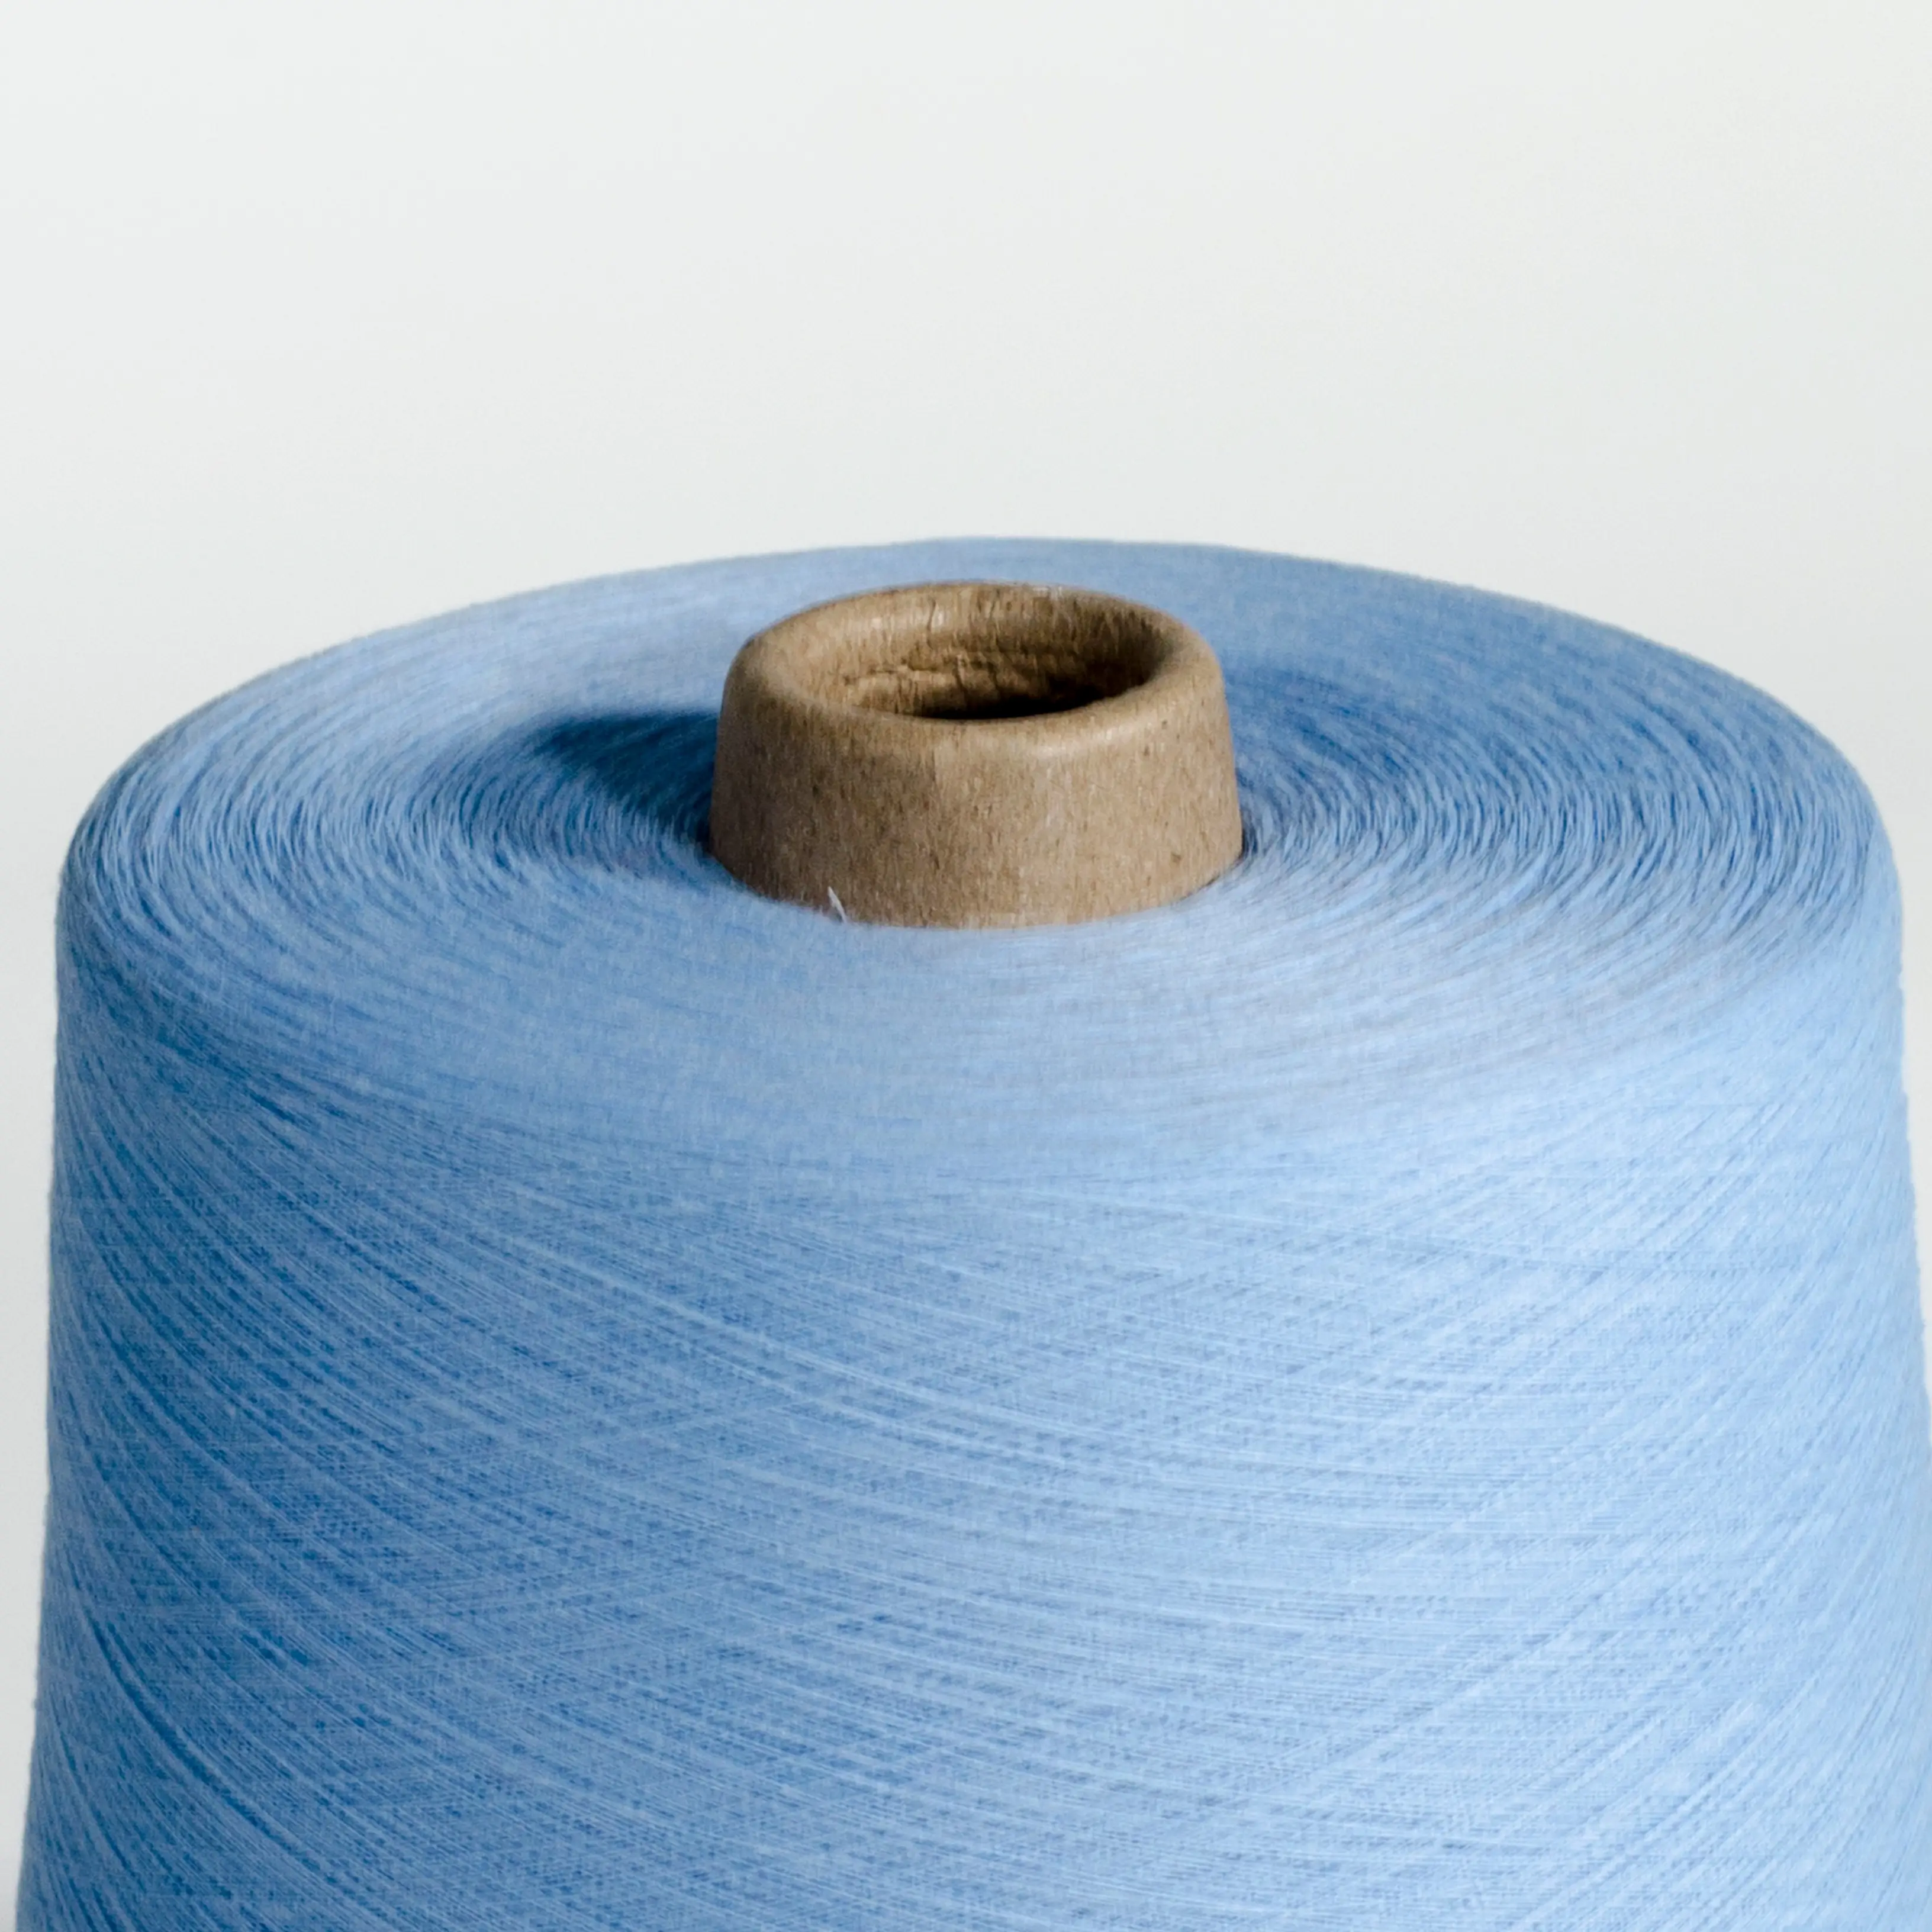 Ring Spun Weaving Knitting Yarn Price Ne 30/1 20/1 21S 32S 40S 60S 80S Pure 100% Combed Cotton Yarn